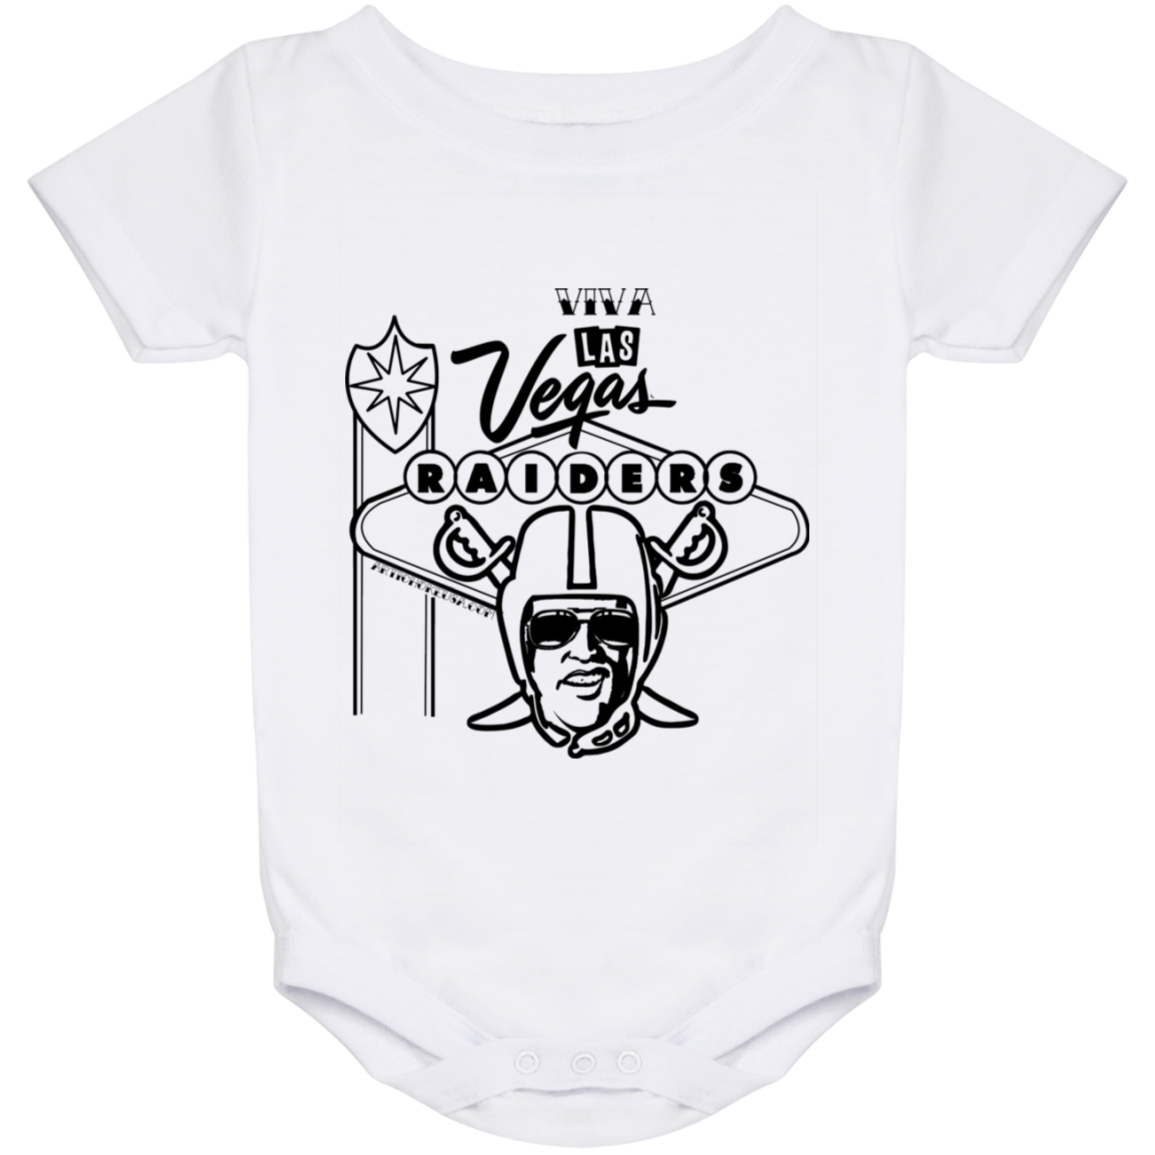 ArtichokeUSA Custom Design. Las Vegas Raiders. Las Vegas / Elvis Presley Parody Fan Art. Let's Create Your Own Team Design Today. Baby Onesie 24 Month